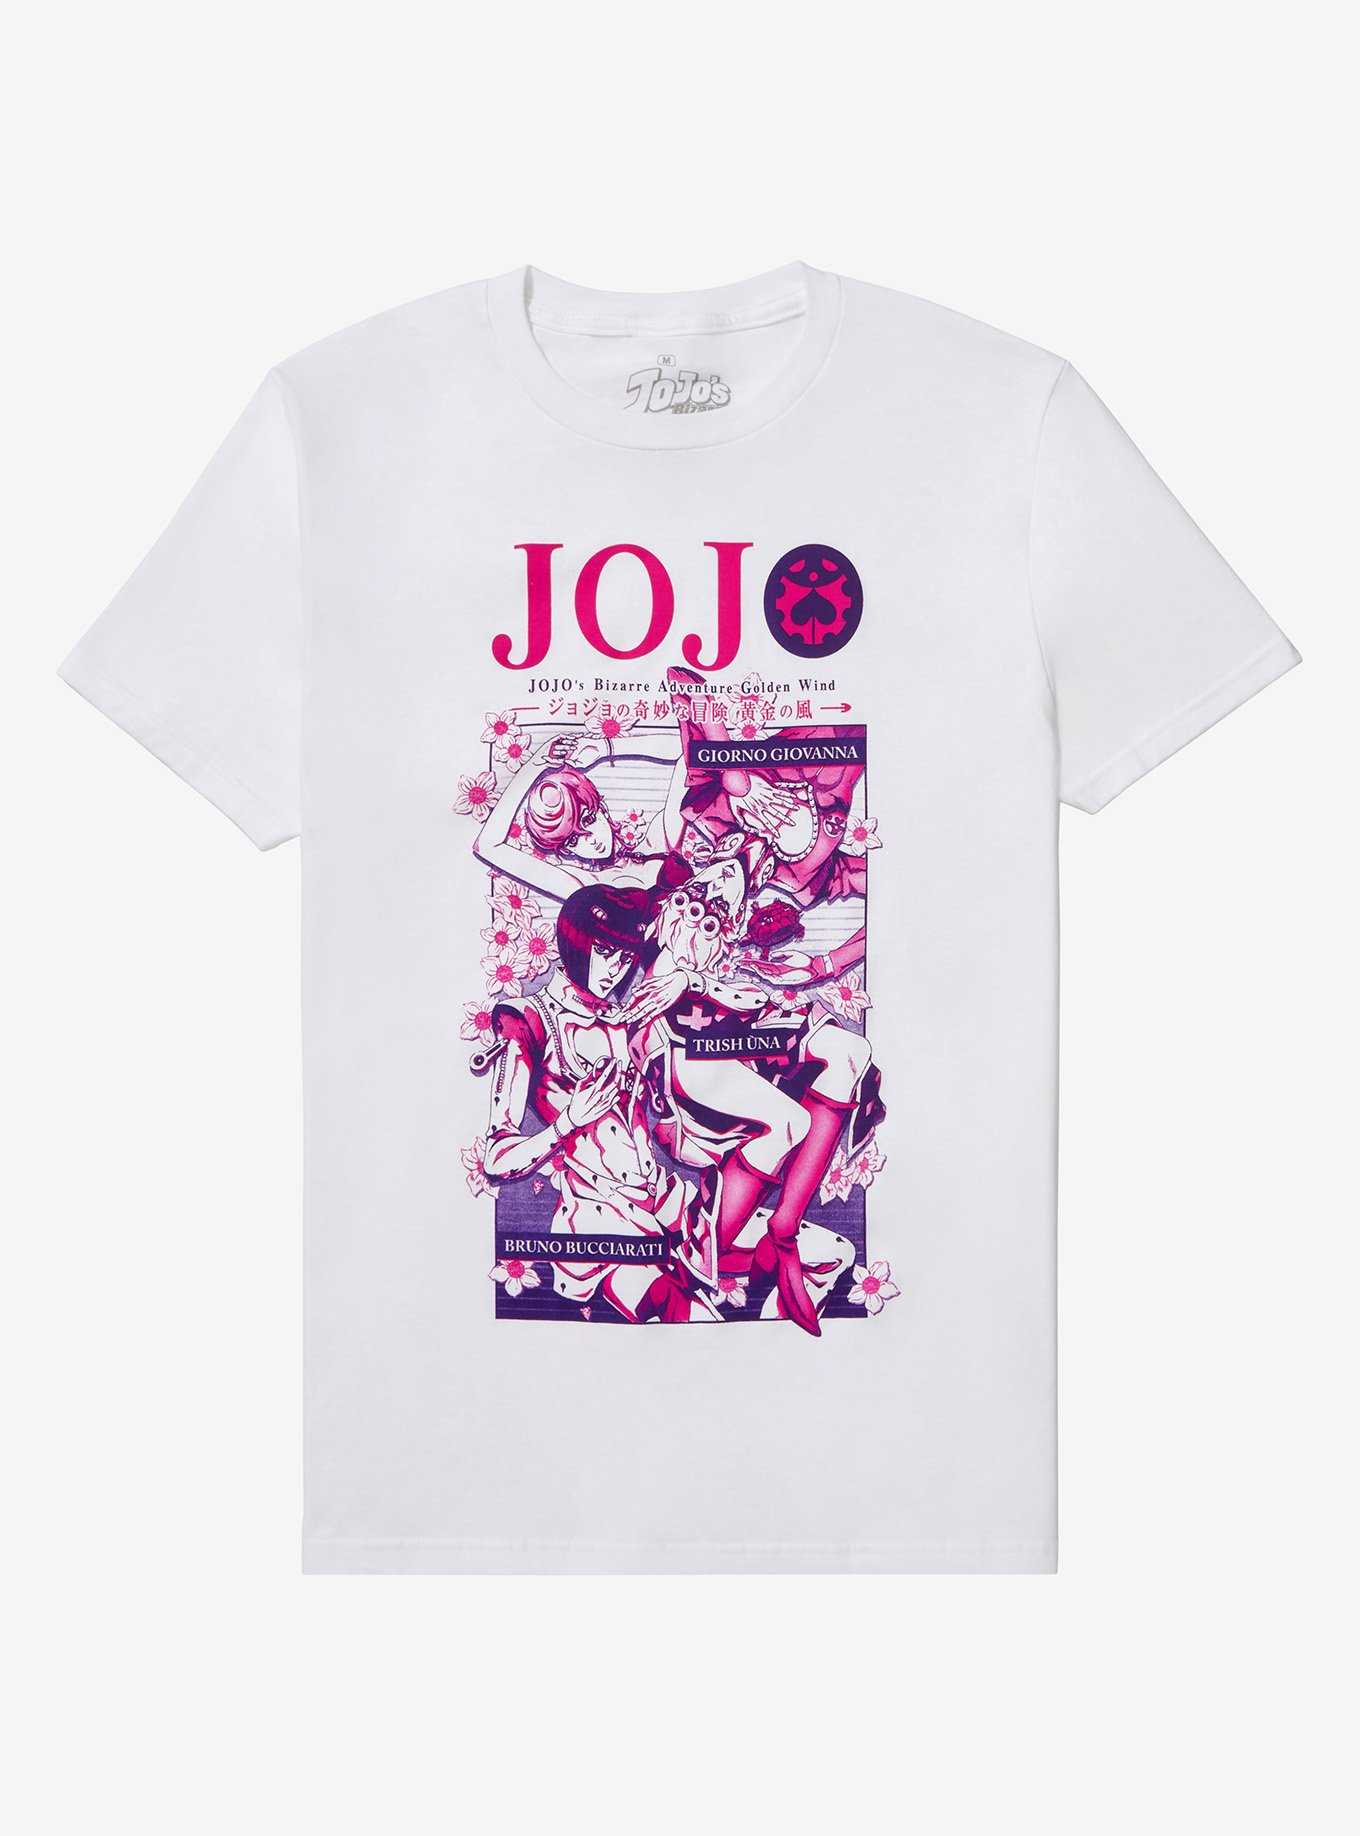 Joseph Joestar “JoJo Pose” – Embroidered Polo Shirt